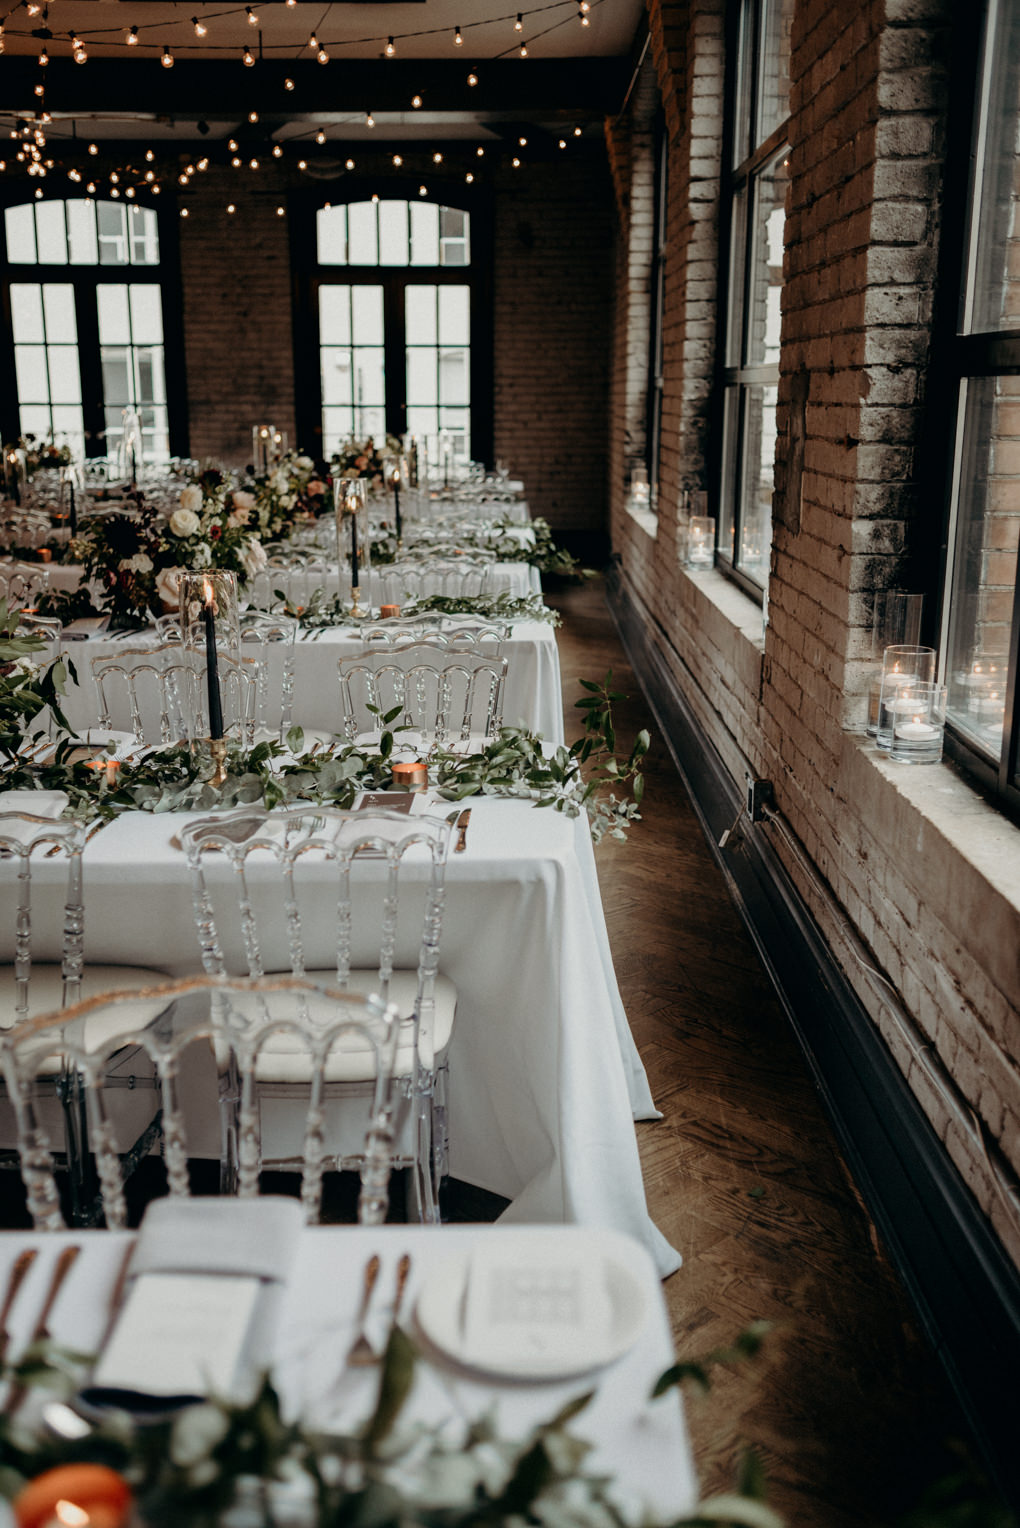 Romantic wedding reception table set up